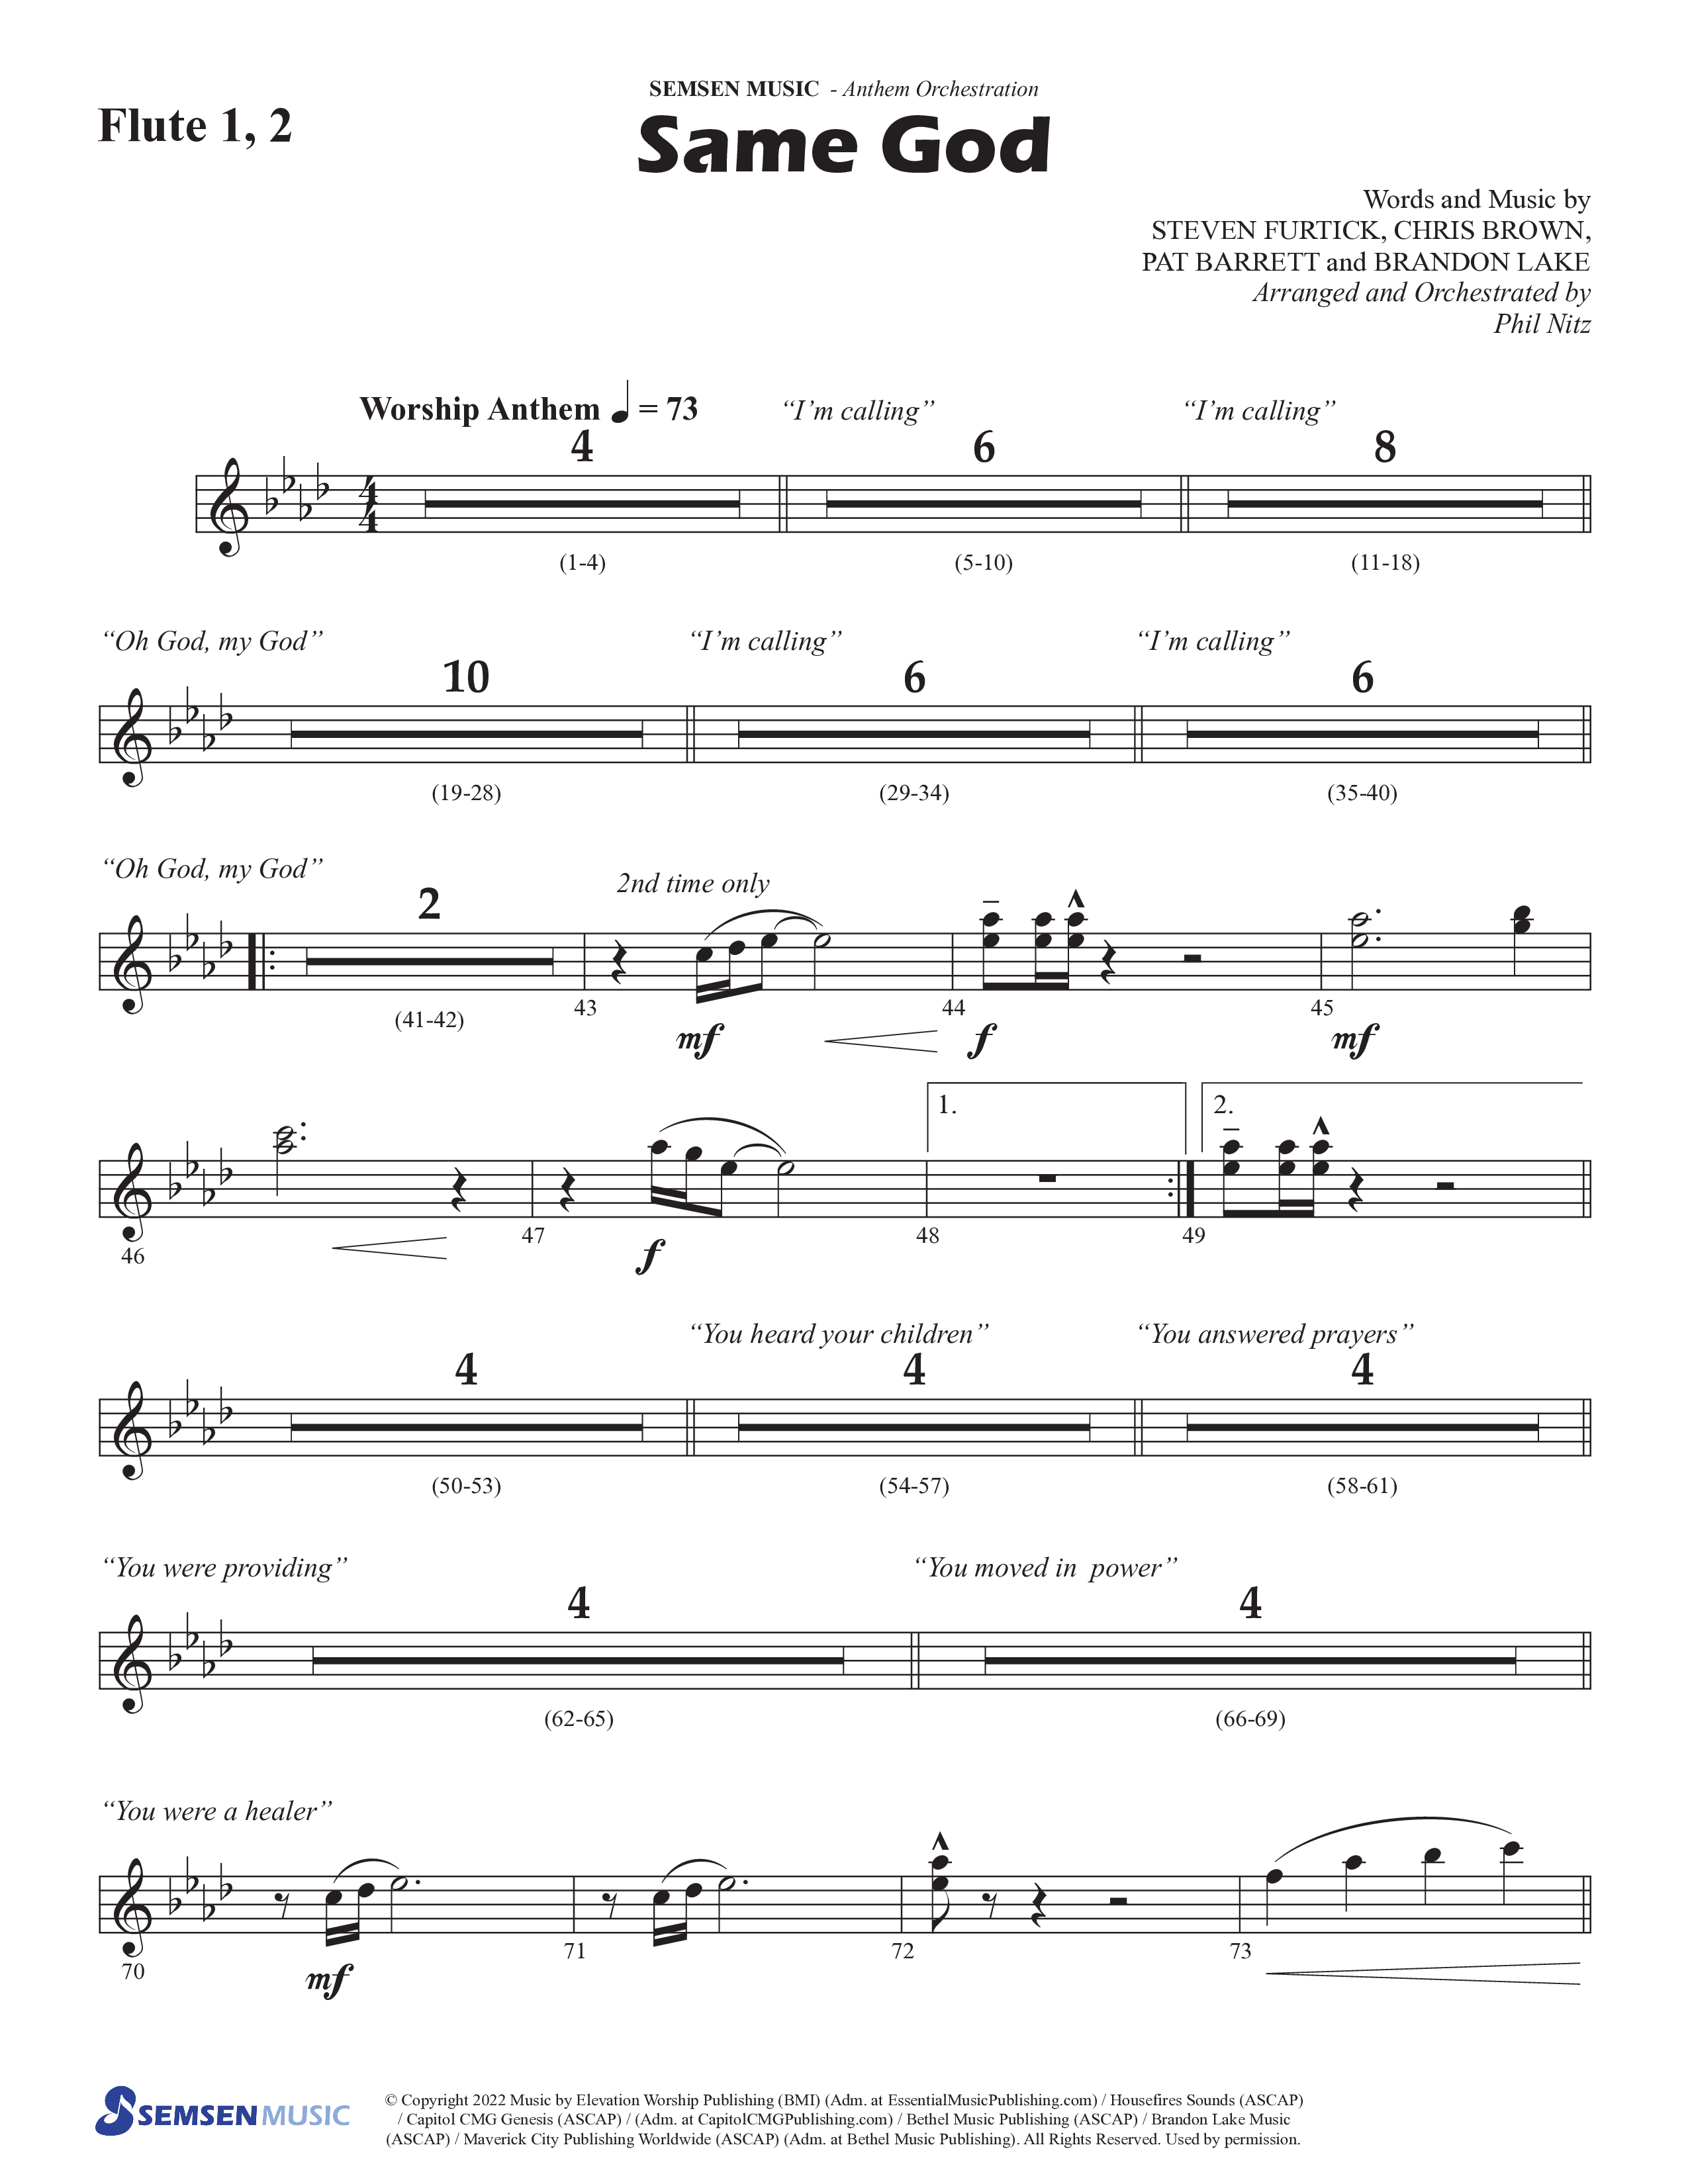 Same God (Choral Anthem SATB) Flute 1/2 (Semsen Music / Arr. Phil Nitz)